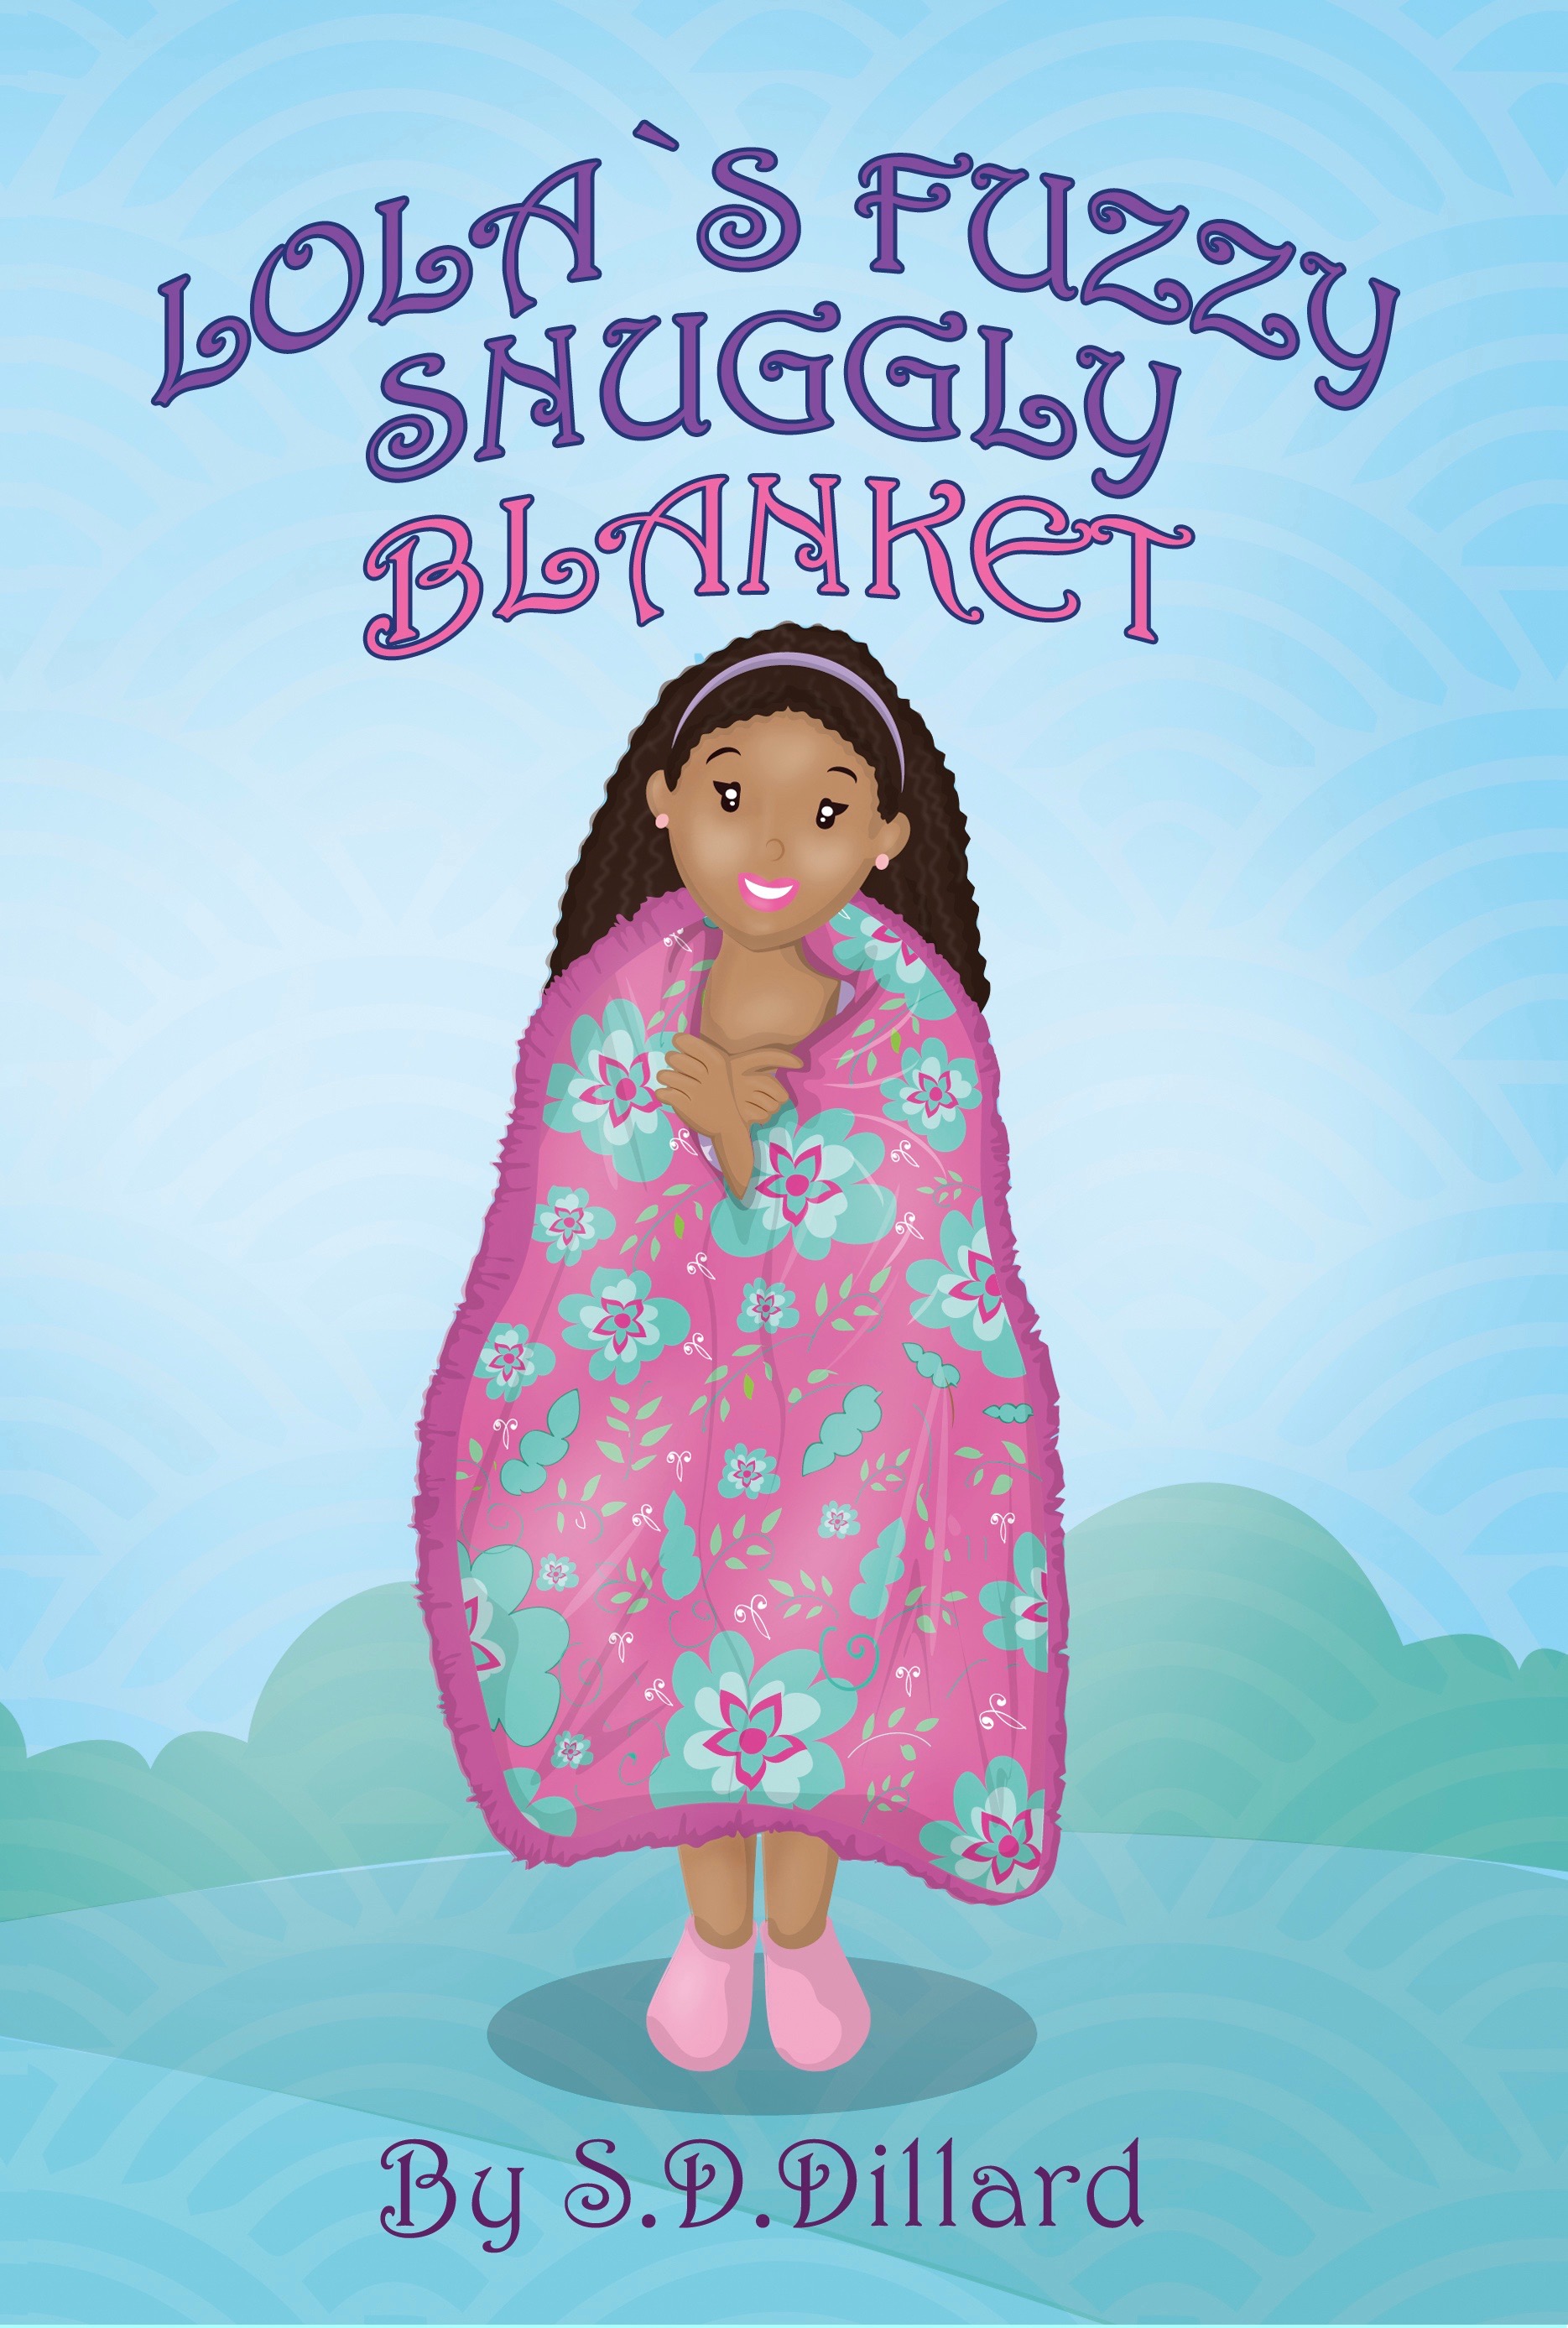 FREE: Lola’s Fuzzy Snuggly Blanket by S. D. Dillard